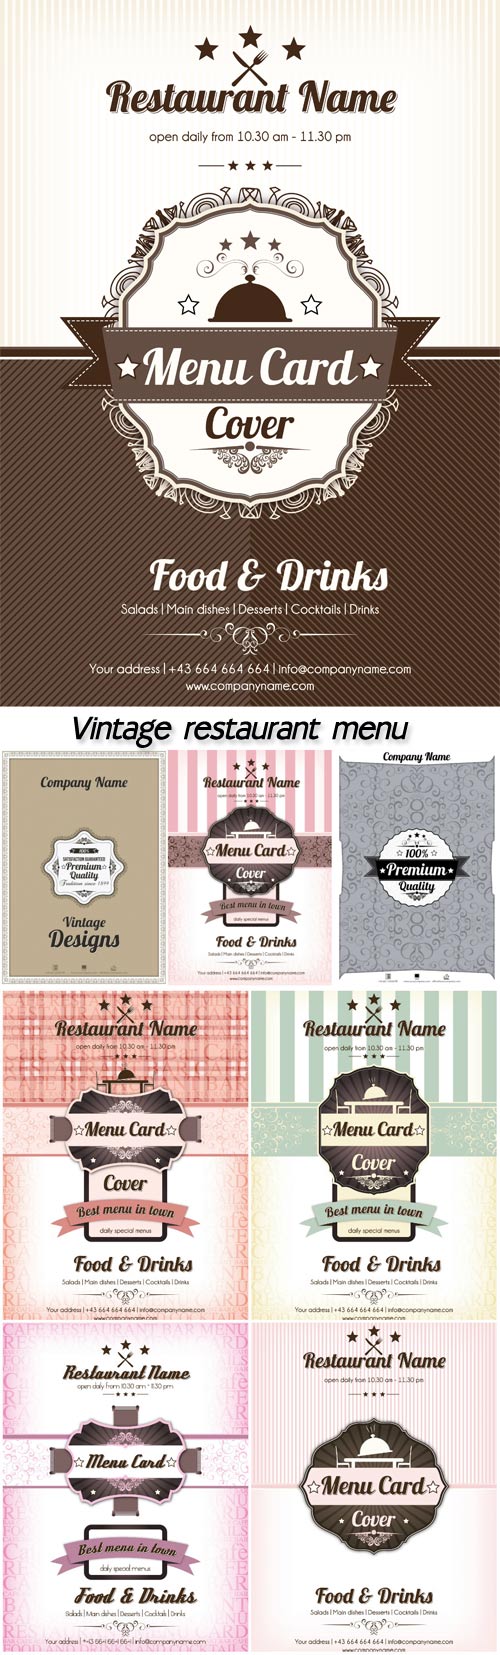 Vintage restaurant menu vector